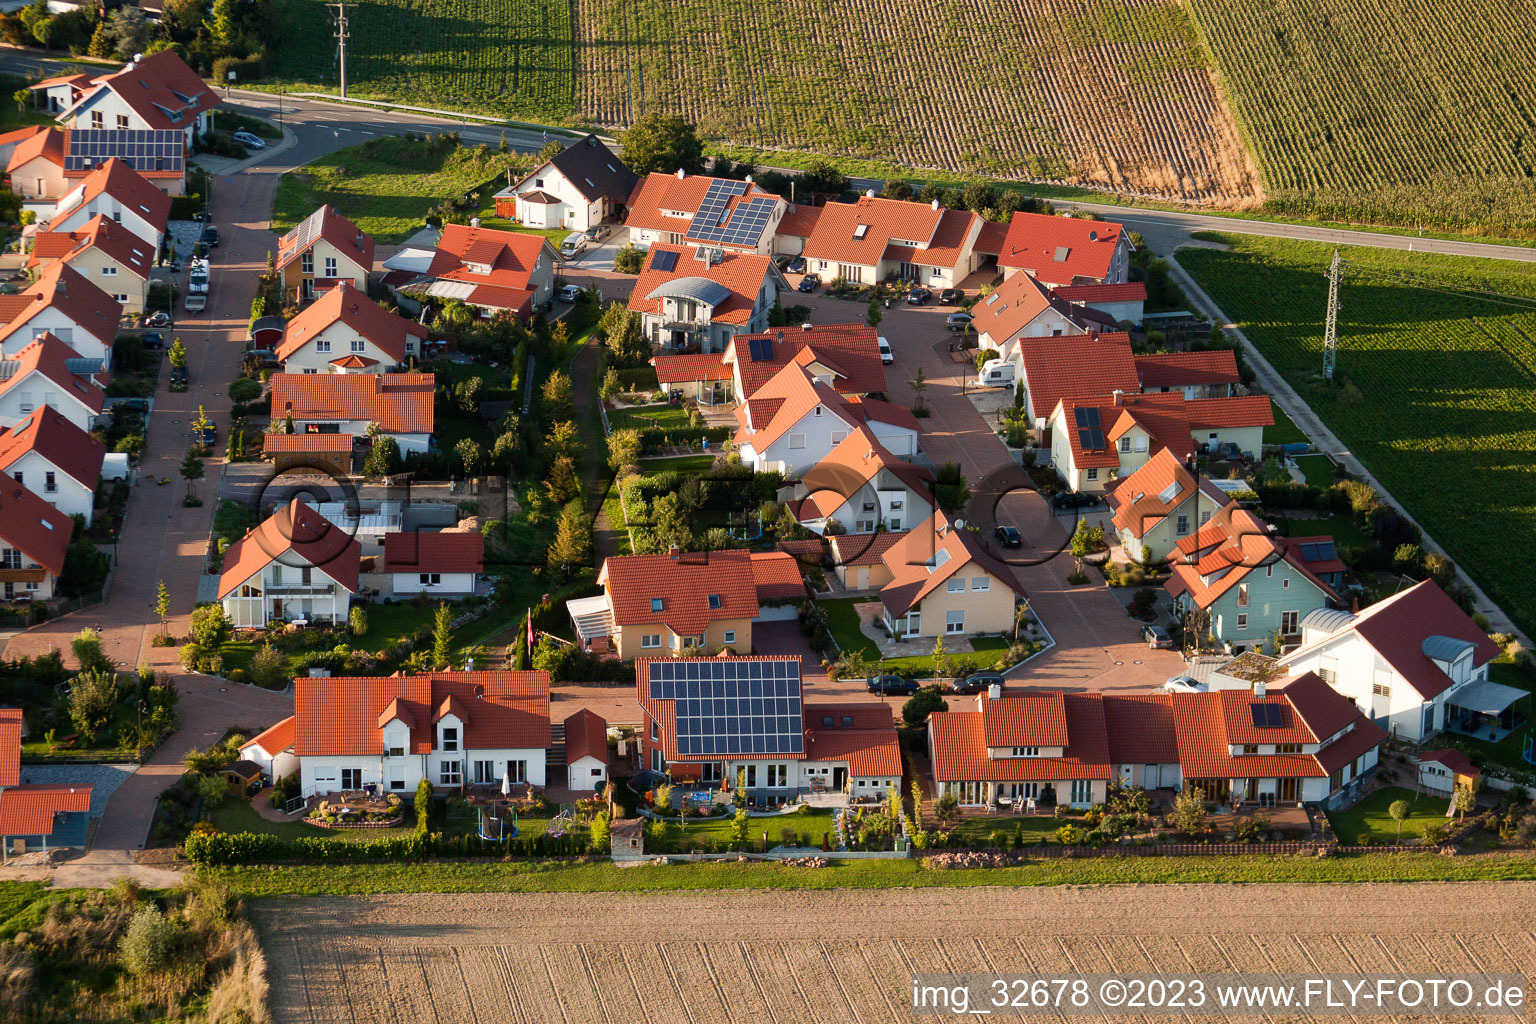 District Hayna in Herxheim bei Landau/Pfalz in the state Rhineland-Palatinate, Germany from a drone